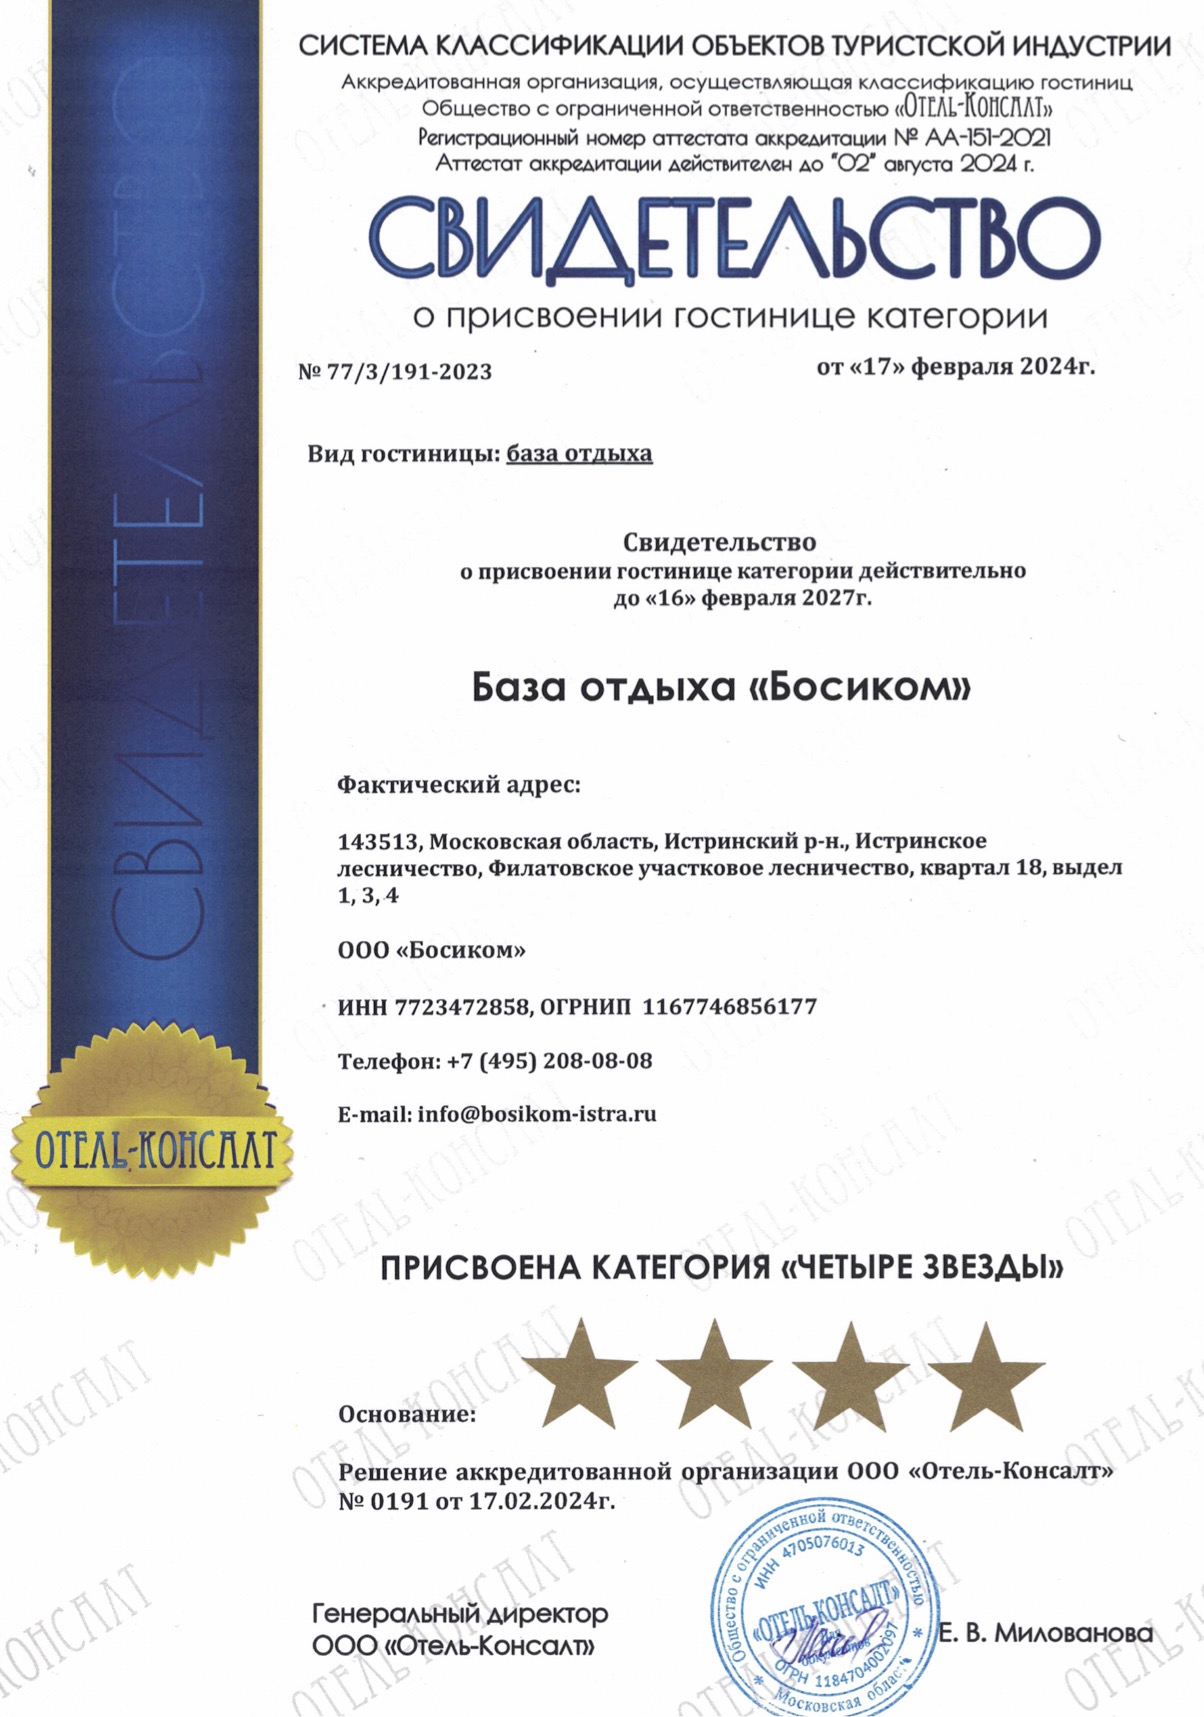 сертификат - 4 звезды